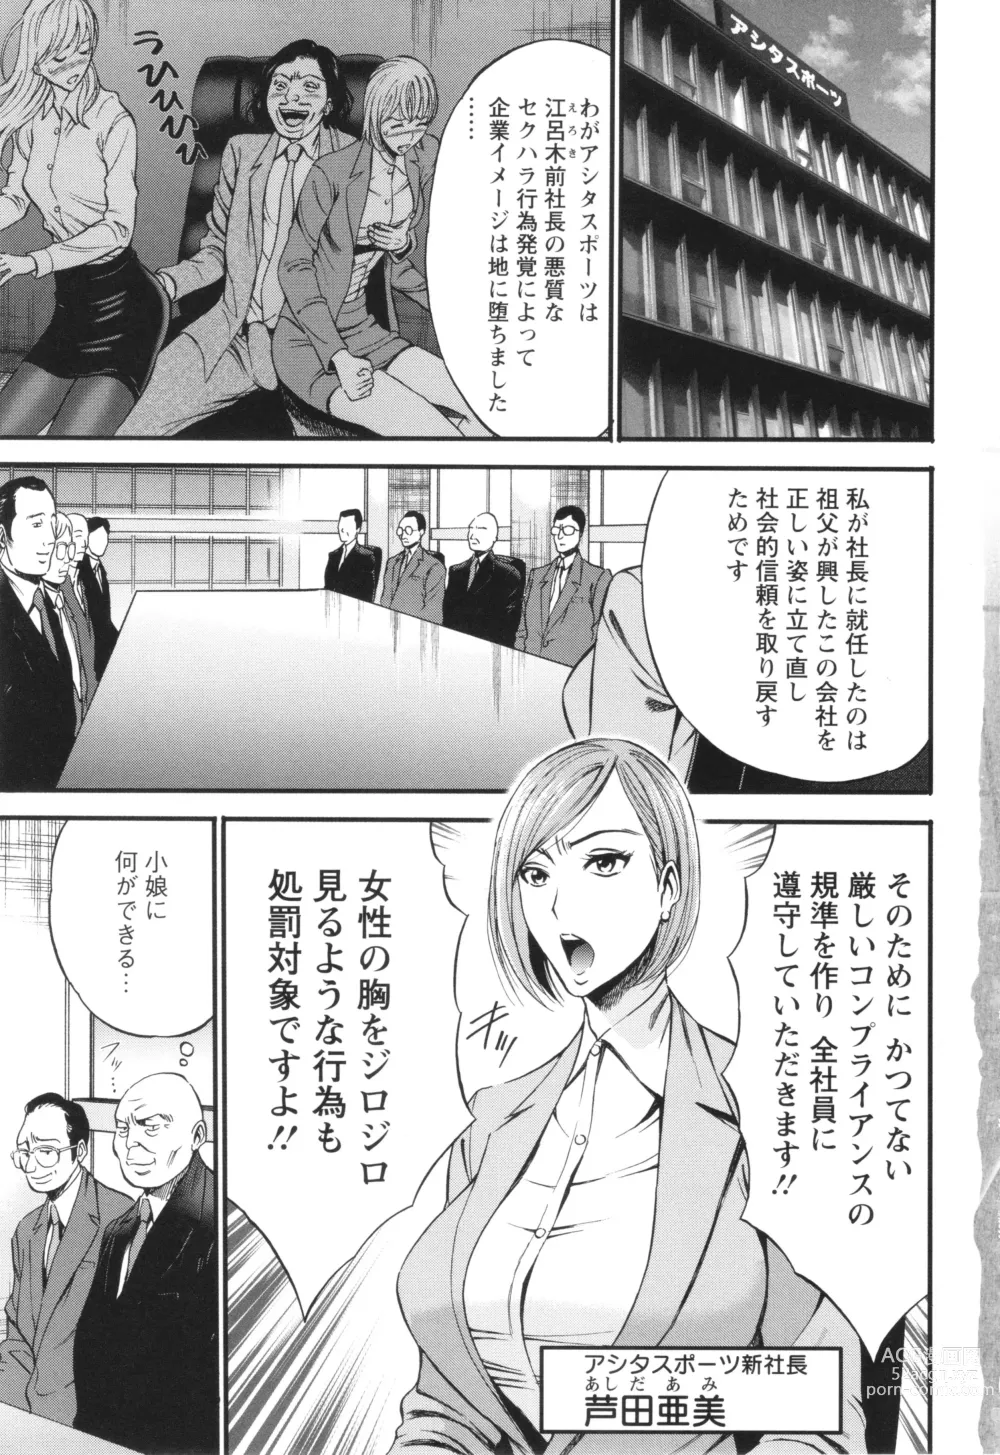 Page 9 of manga Compla Yuruyuru Chimari-san  - Chimaris compliance awareness is very lax.